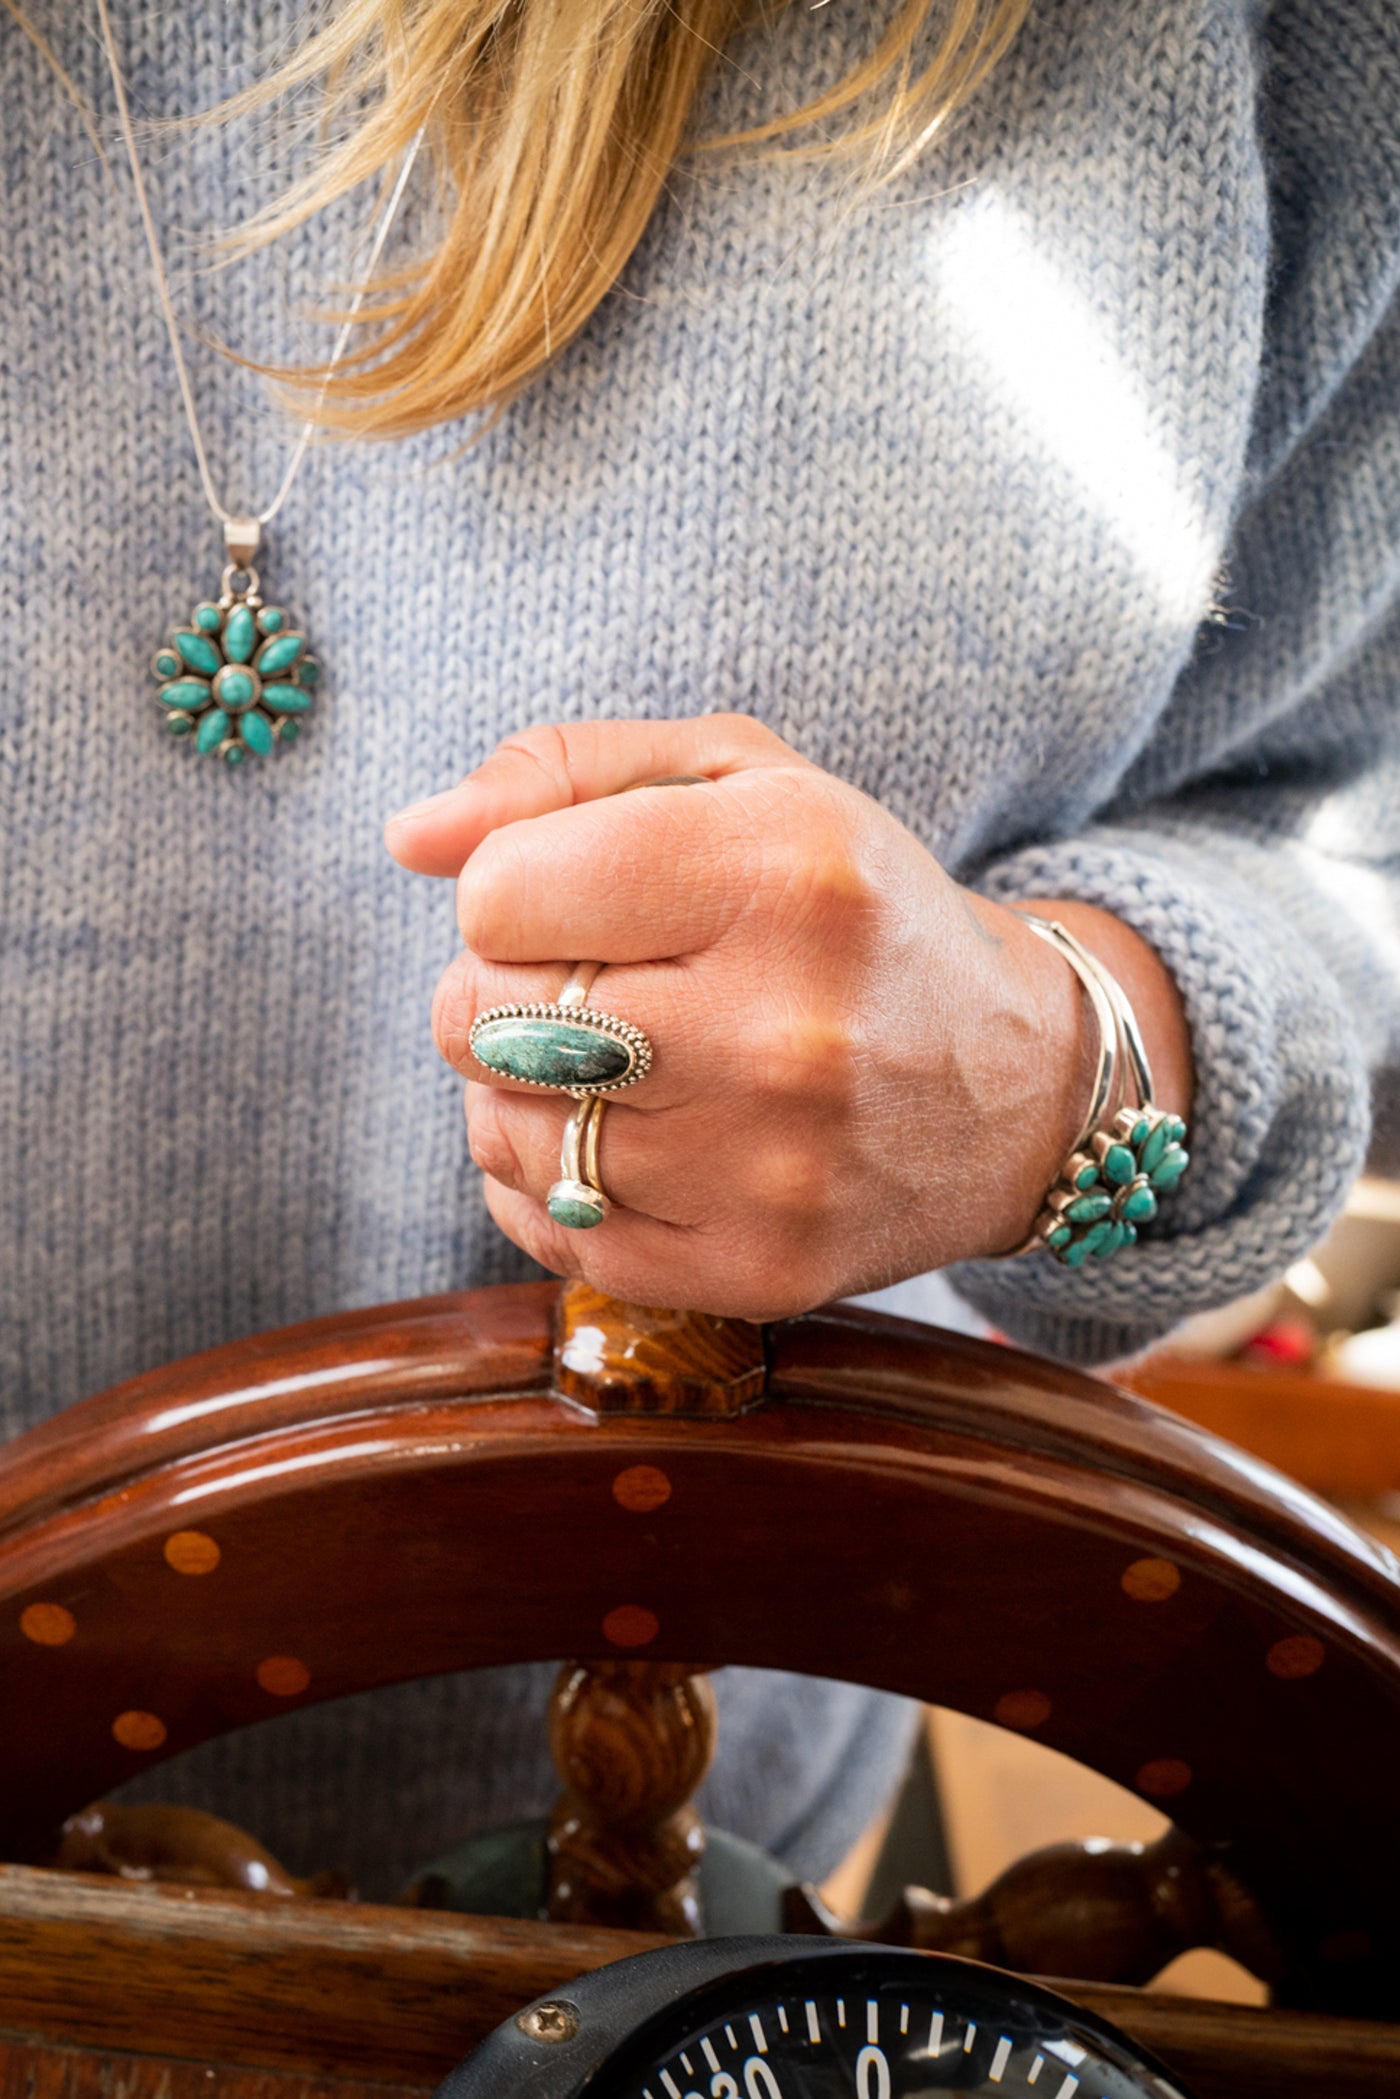 Turquoise Flower Gemstone Cuff Bracelet